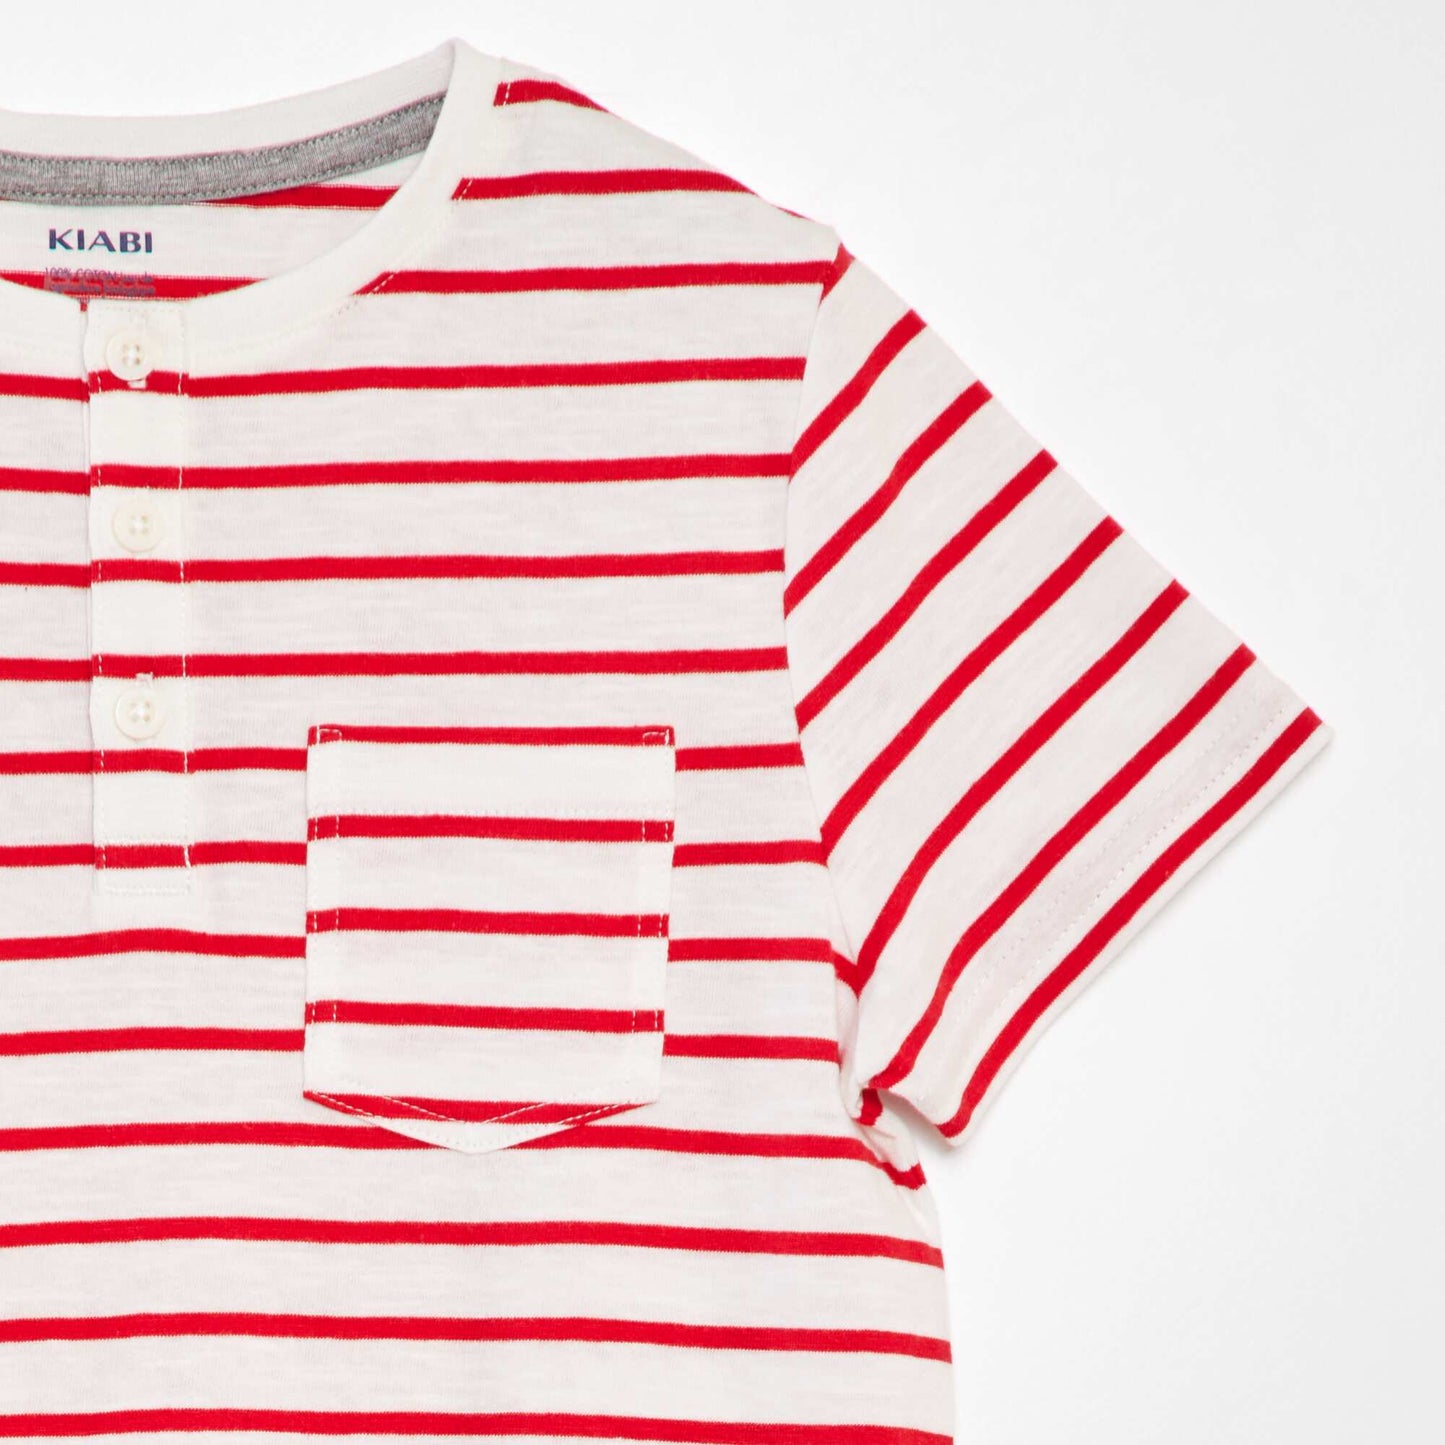 Grandad collar striped T-shirt RED